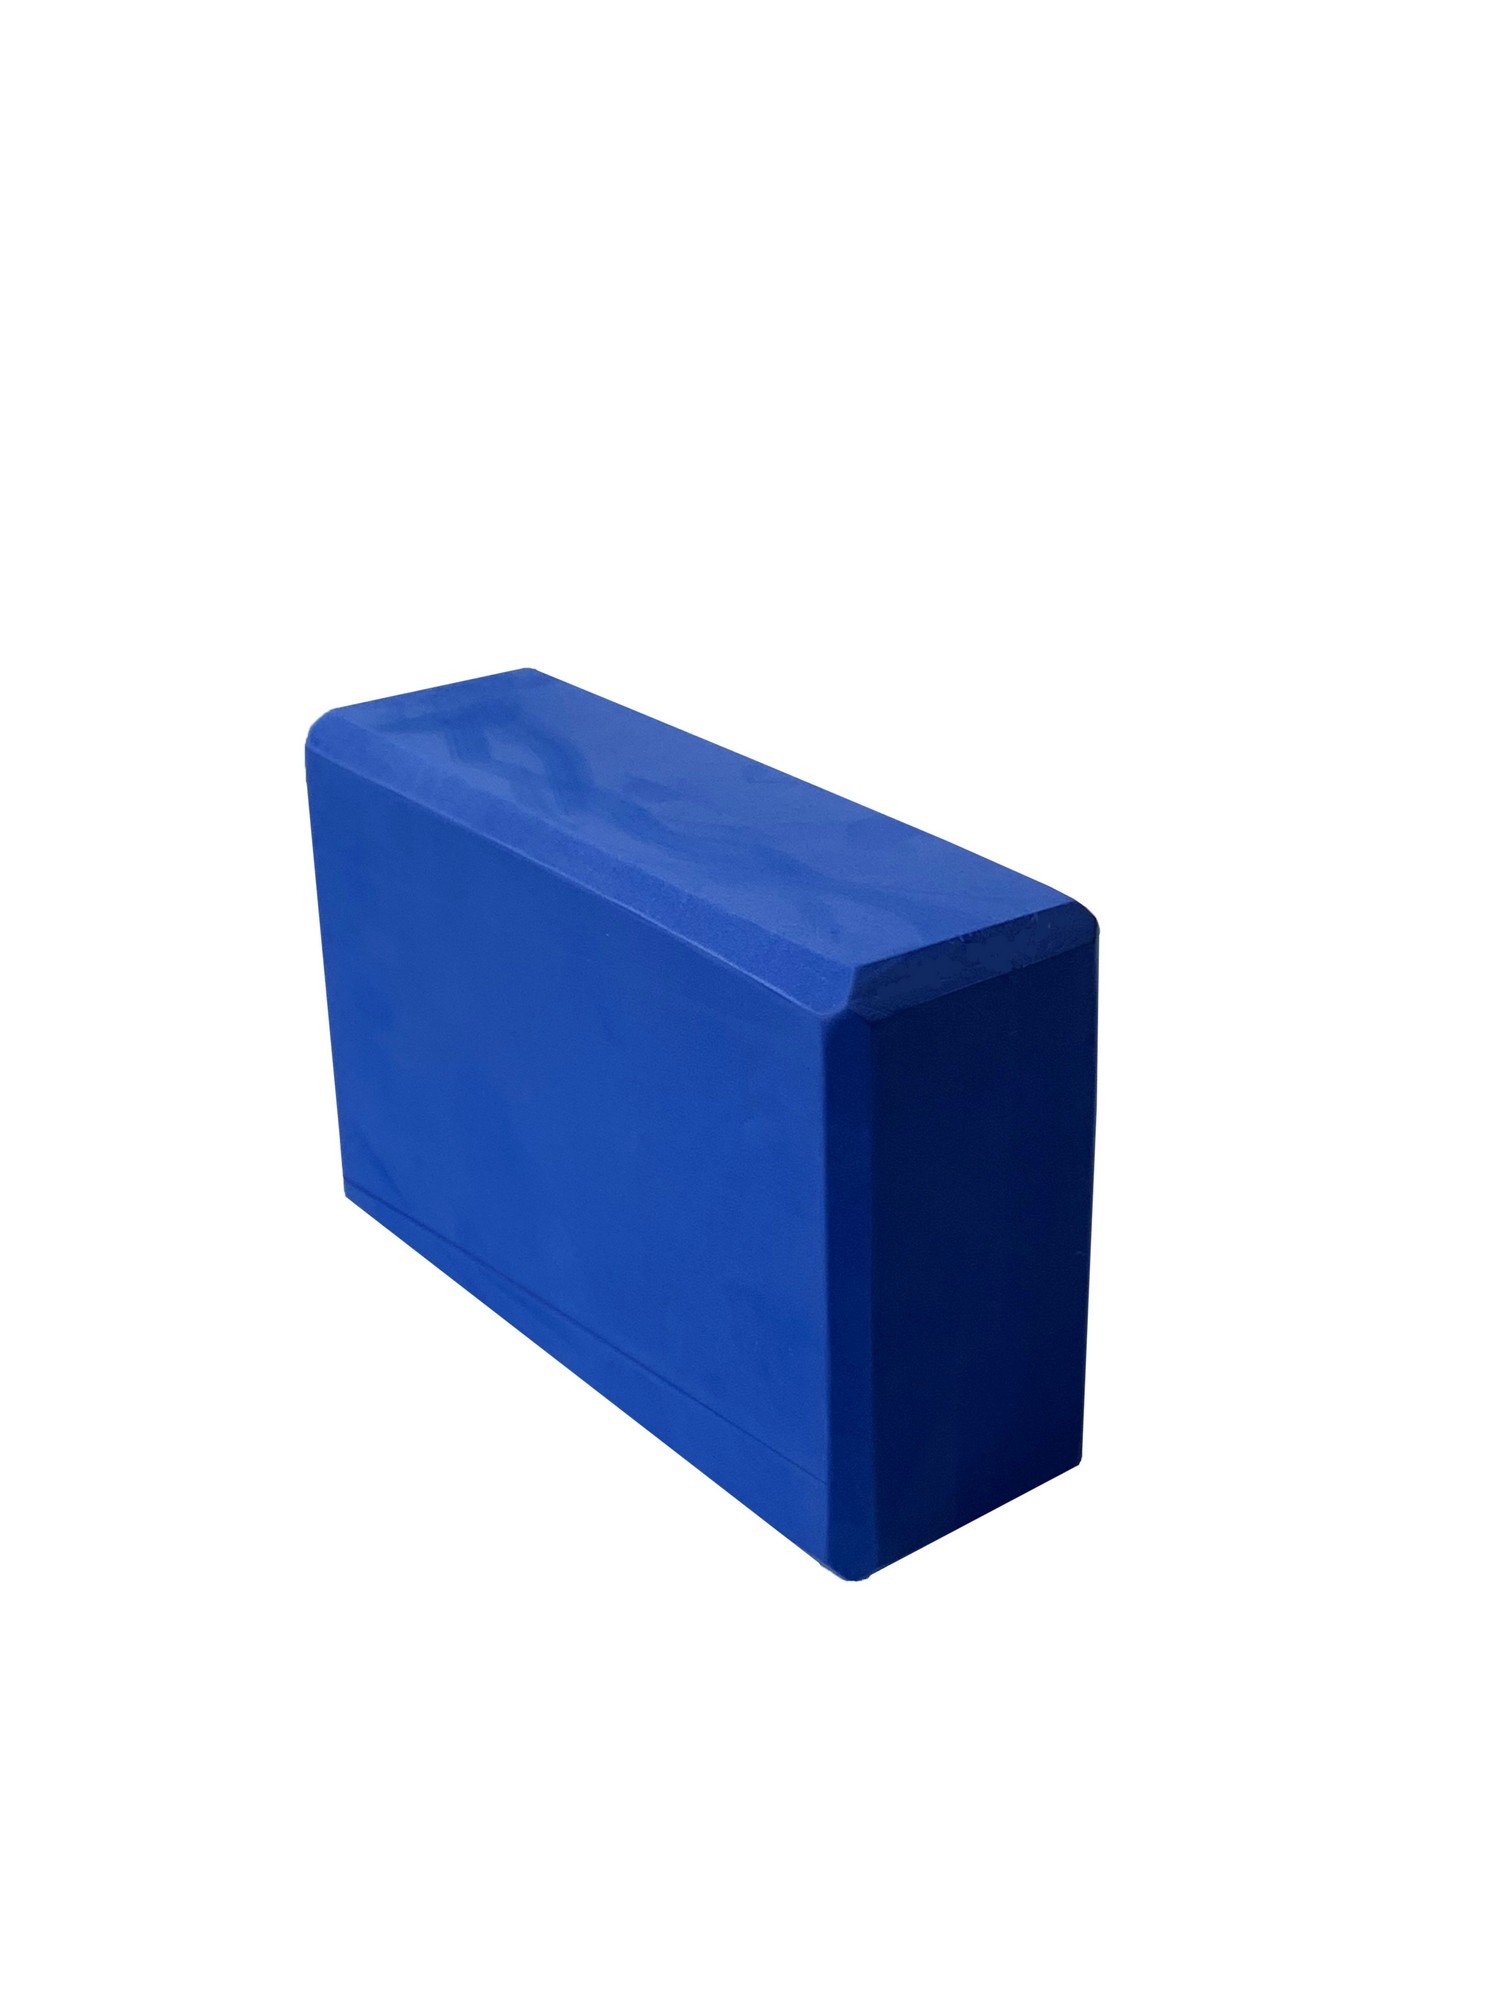 Йога блок Sportex полумягкий, из вспененного ЭВА 22,3х15х7,6 см E39131-53 синий - фото 1